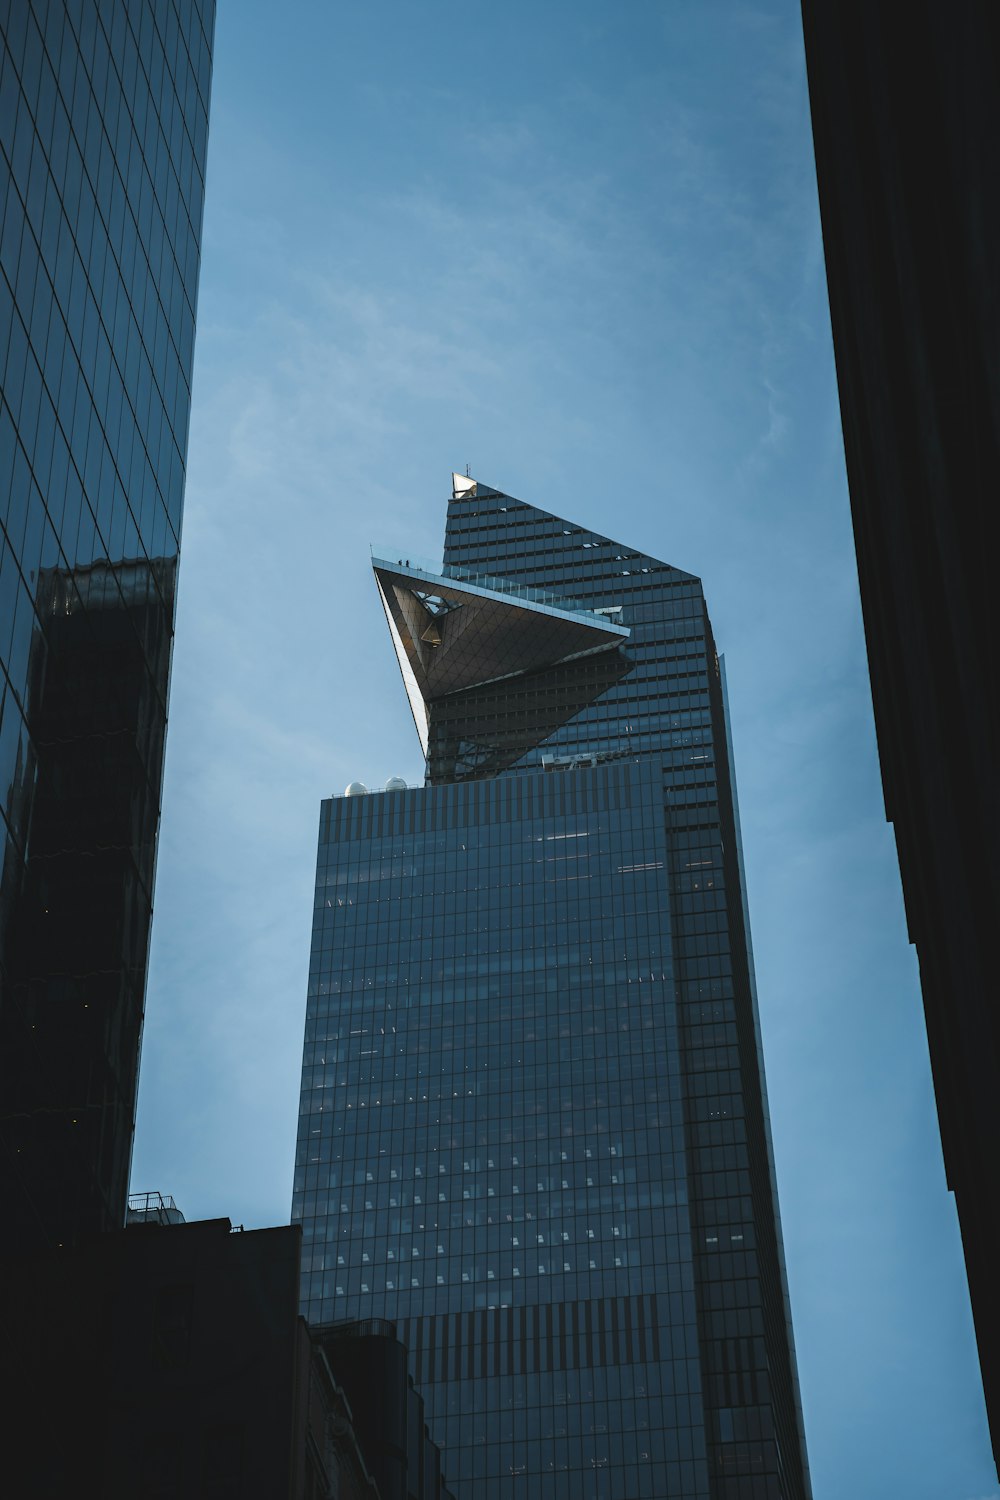 Un edificio muy alto con un techo triangular